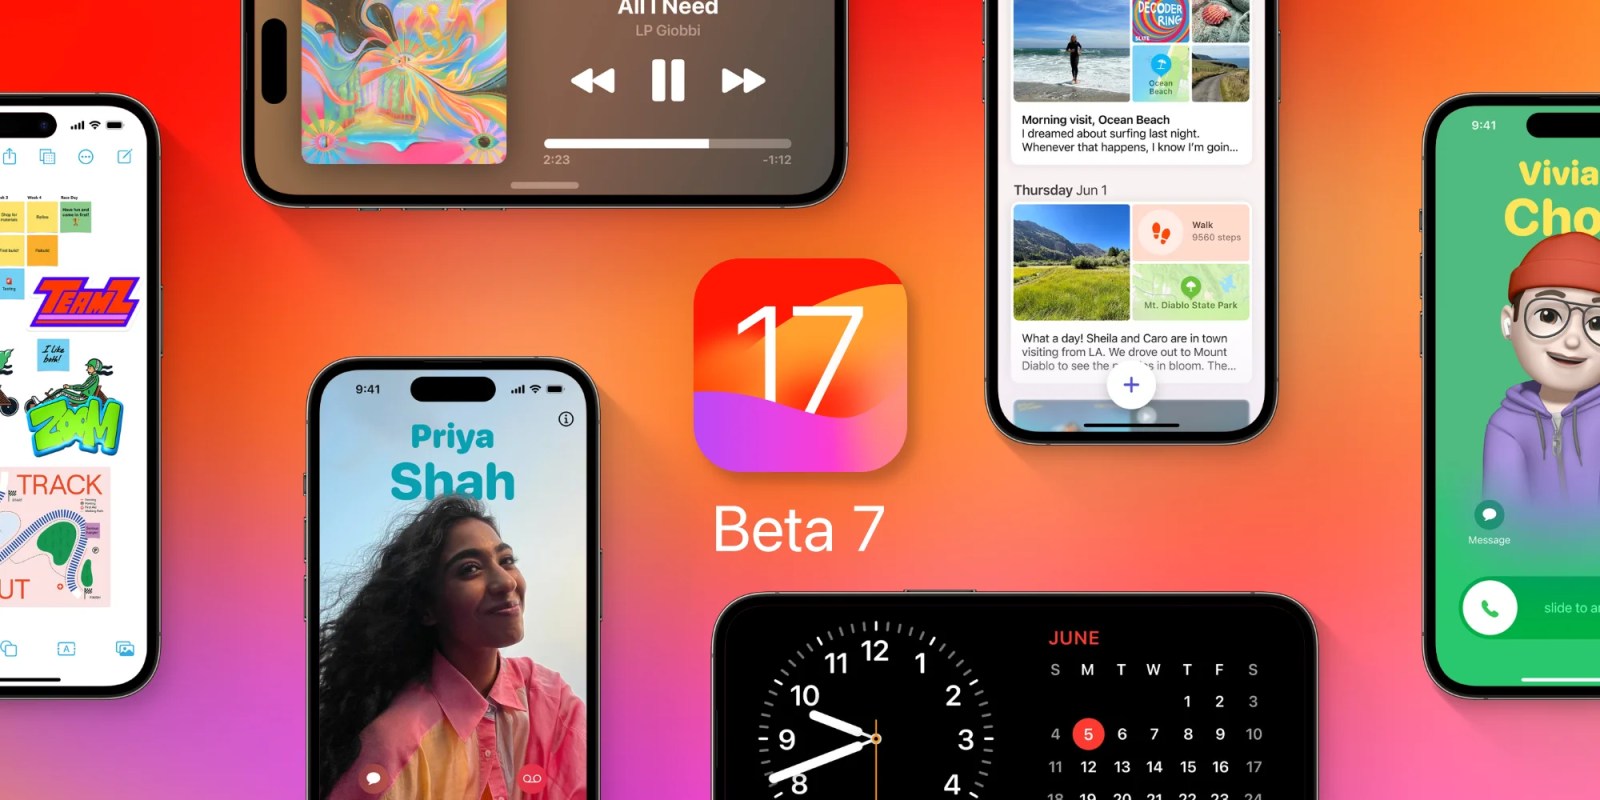 iOS 17 Beta 7